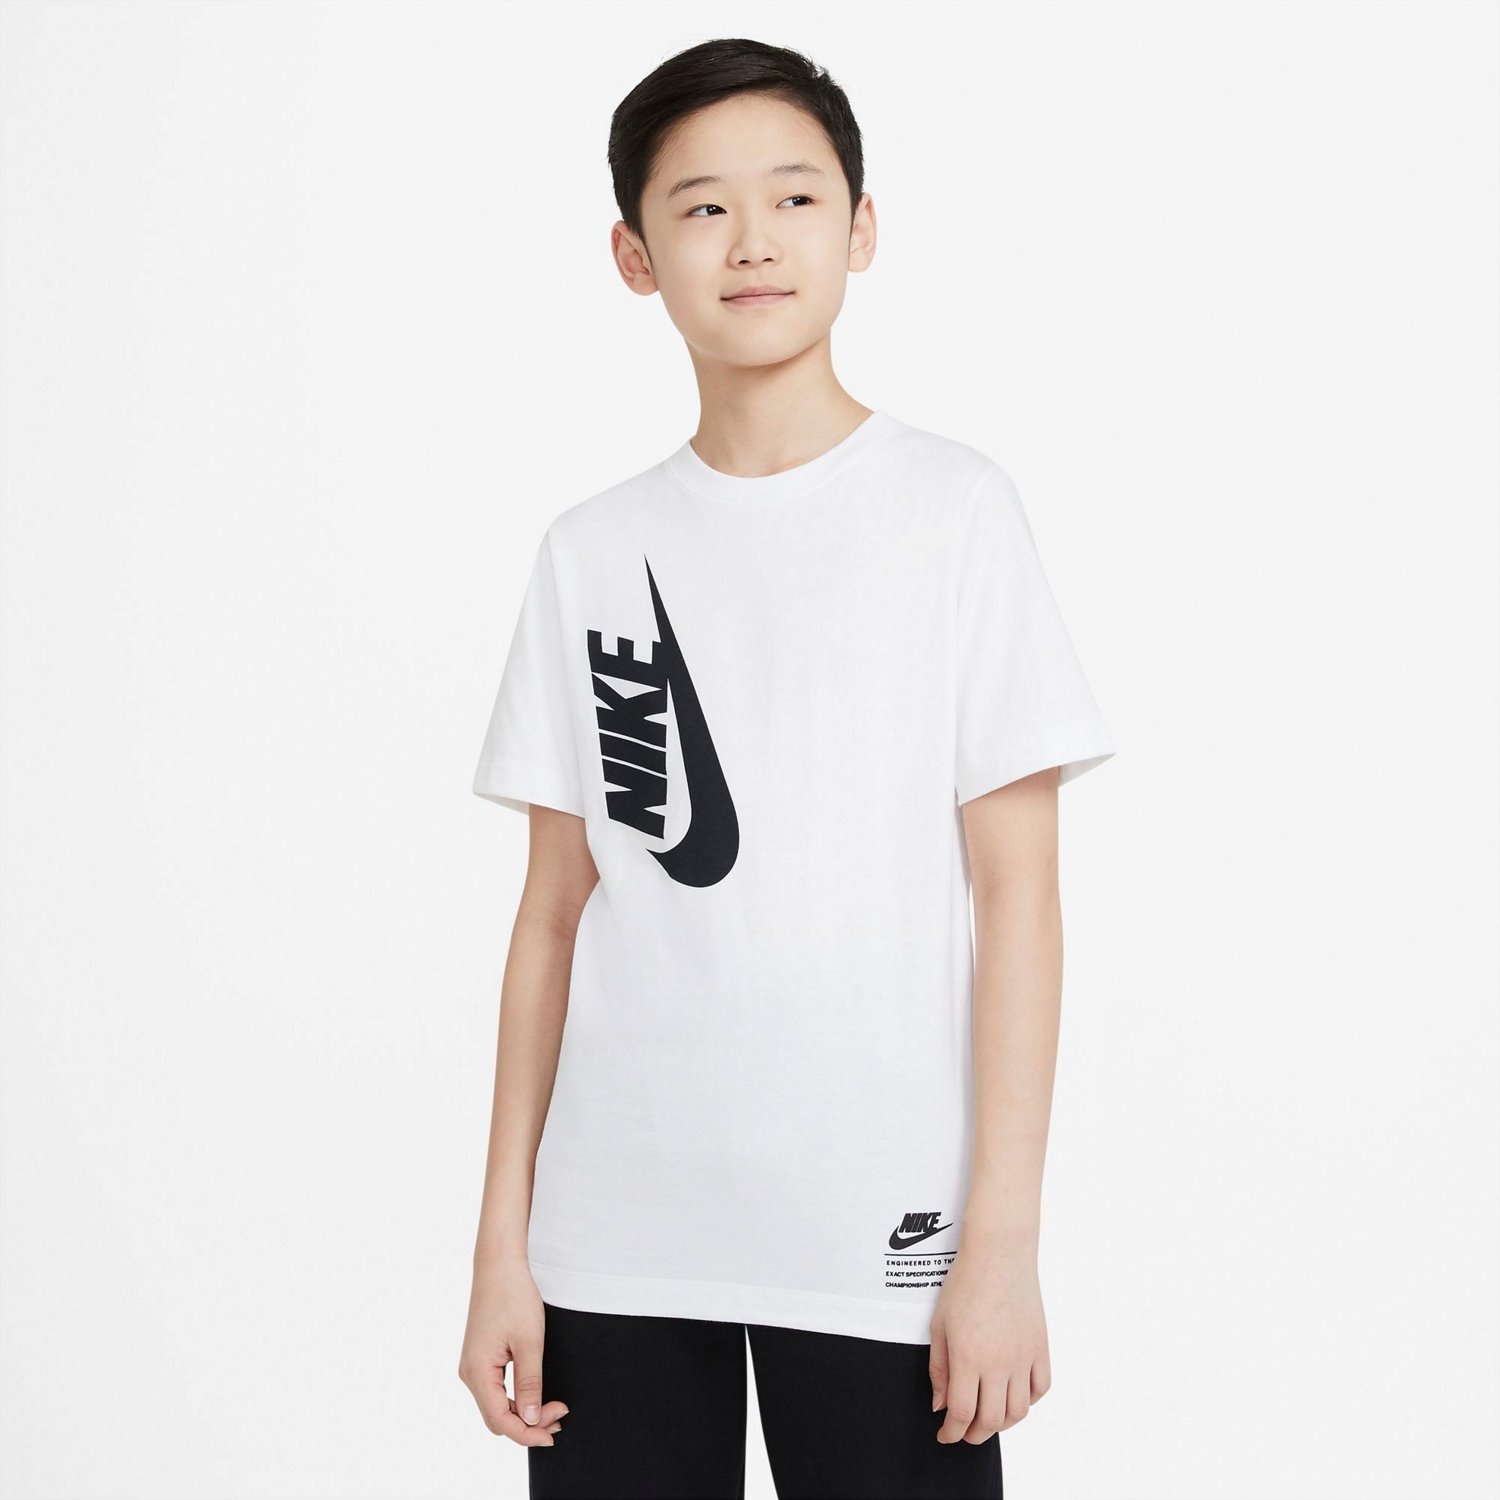 Nike Boys' Nike Sportswear Amplify Short Sleeve T-shirt | Academy